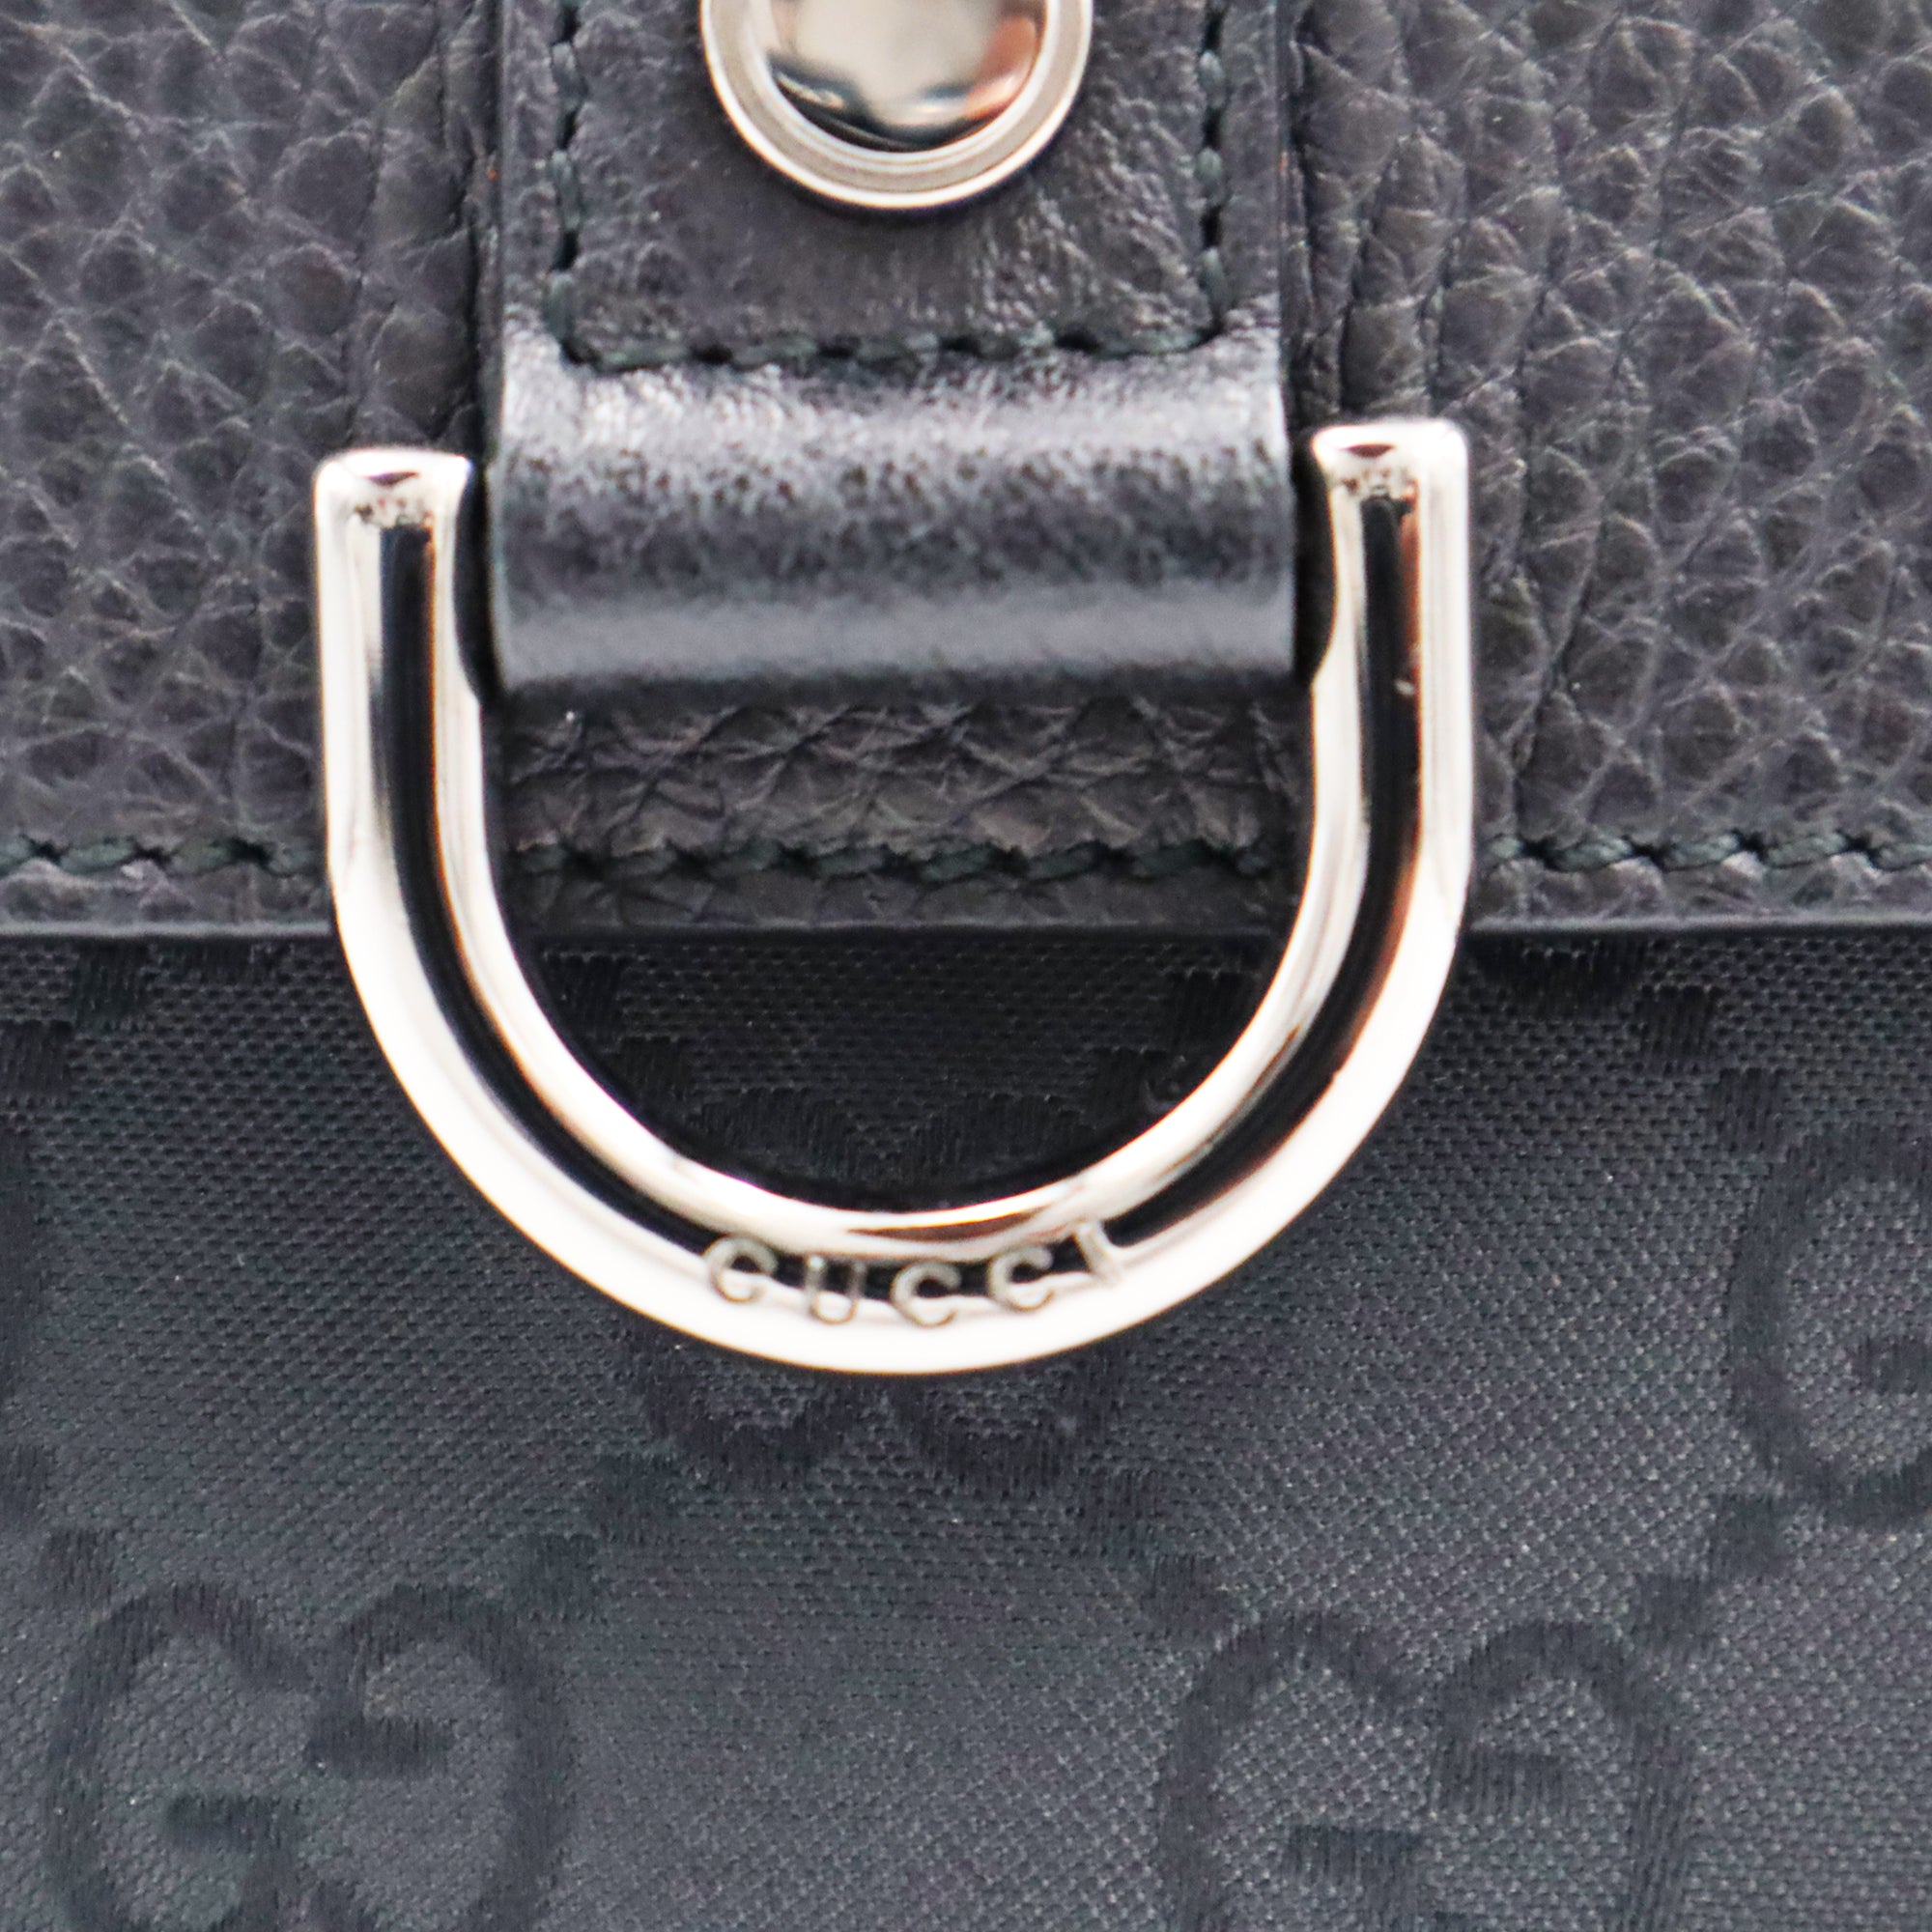 Pre-Owned Gucci GG Nylon Shoulder Bag